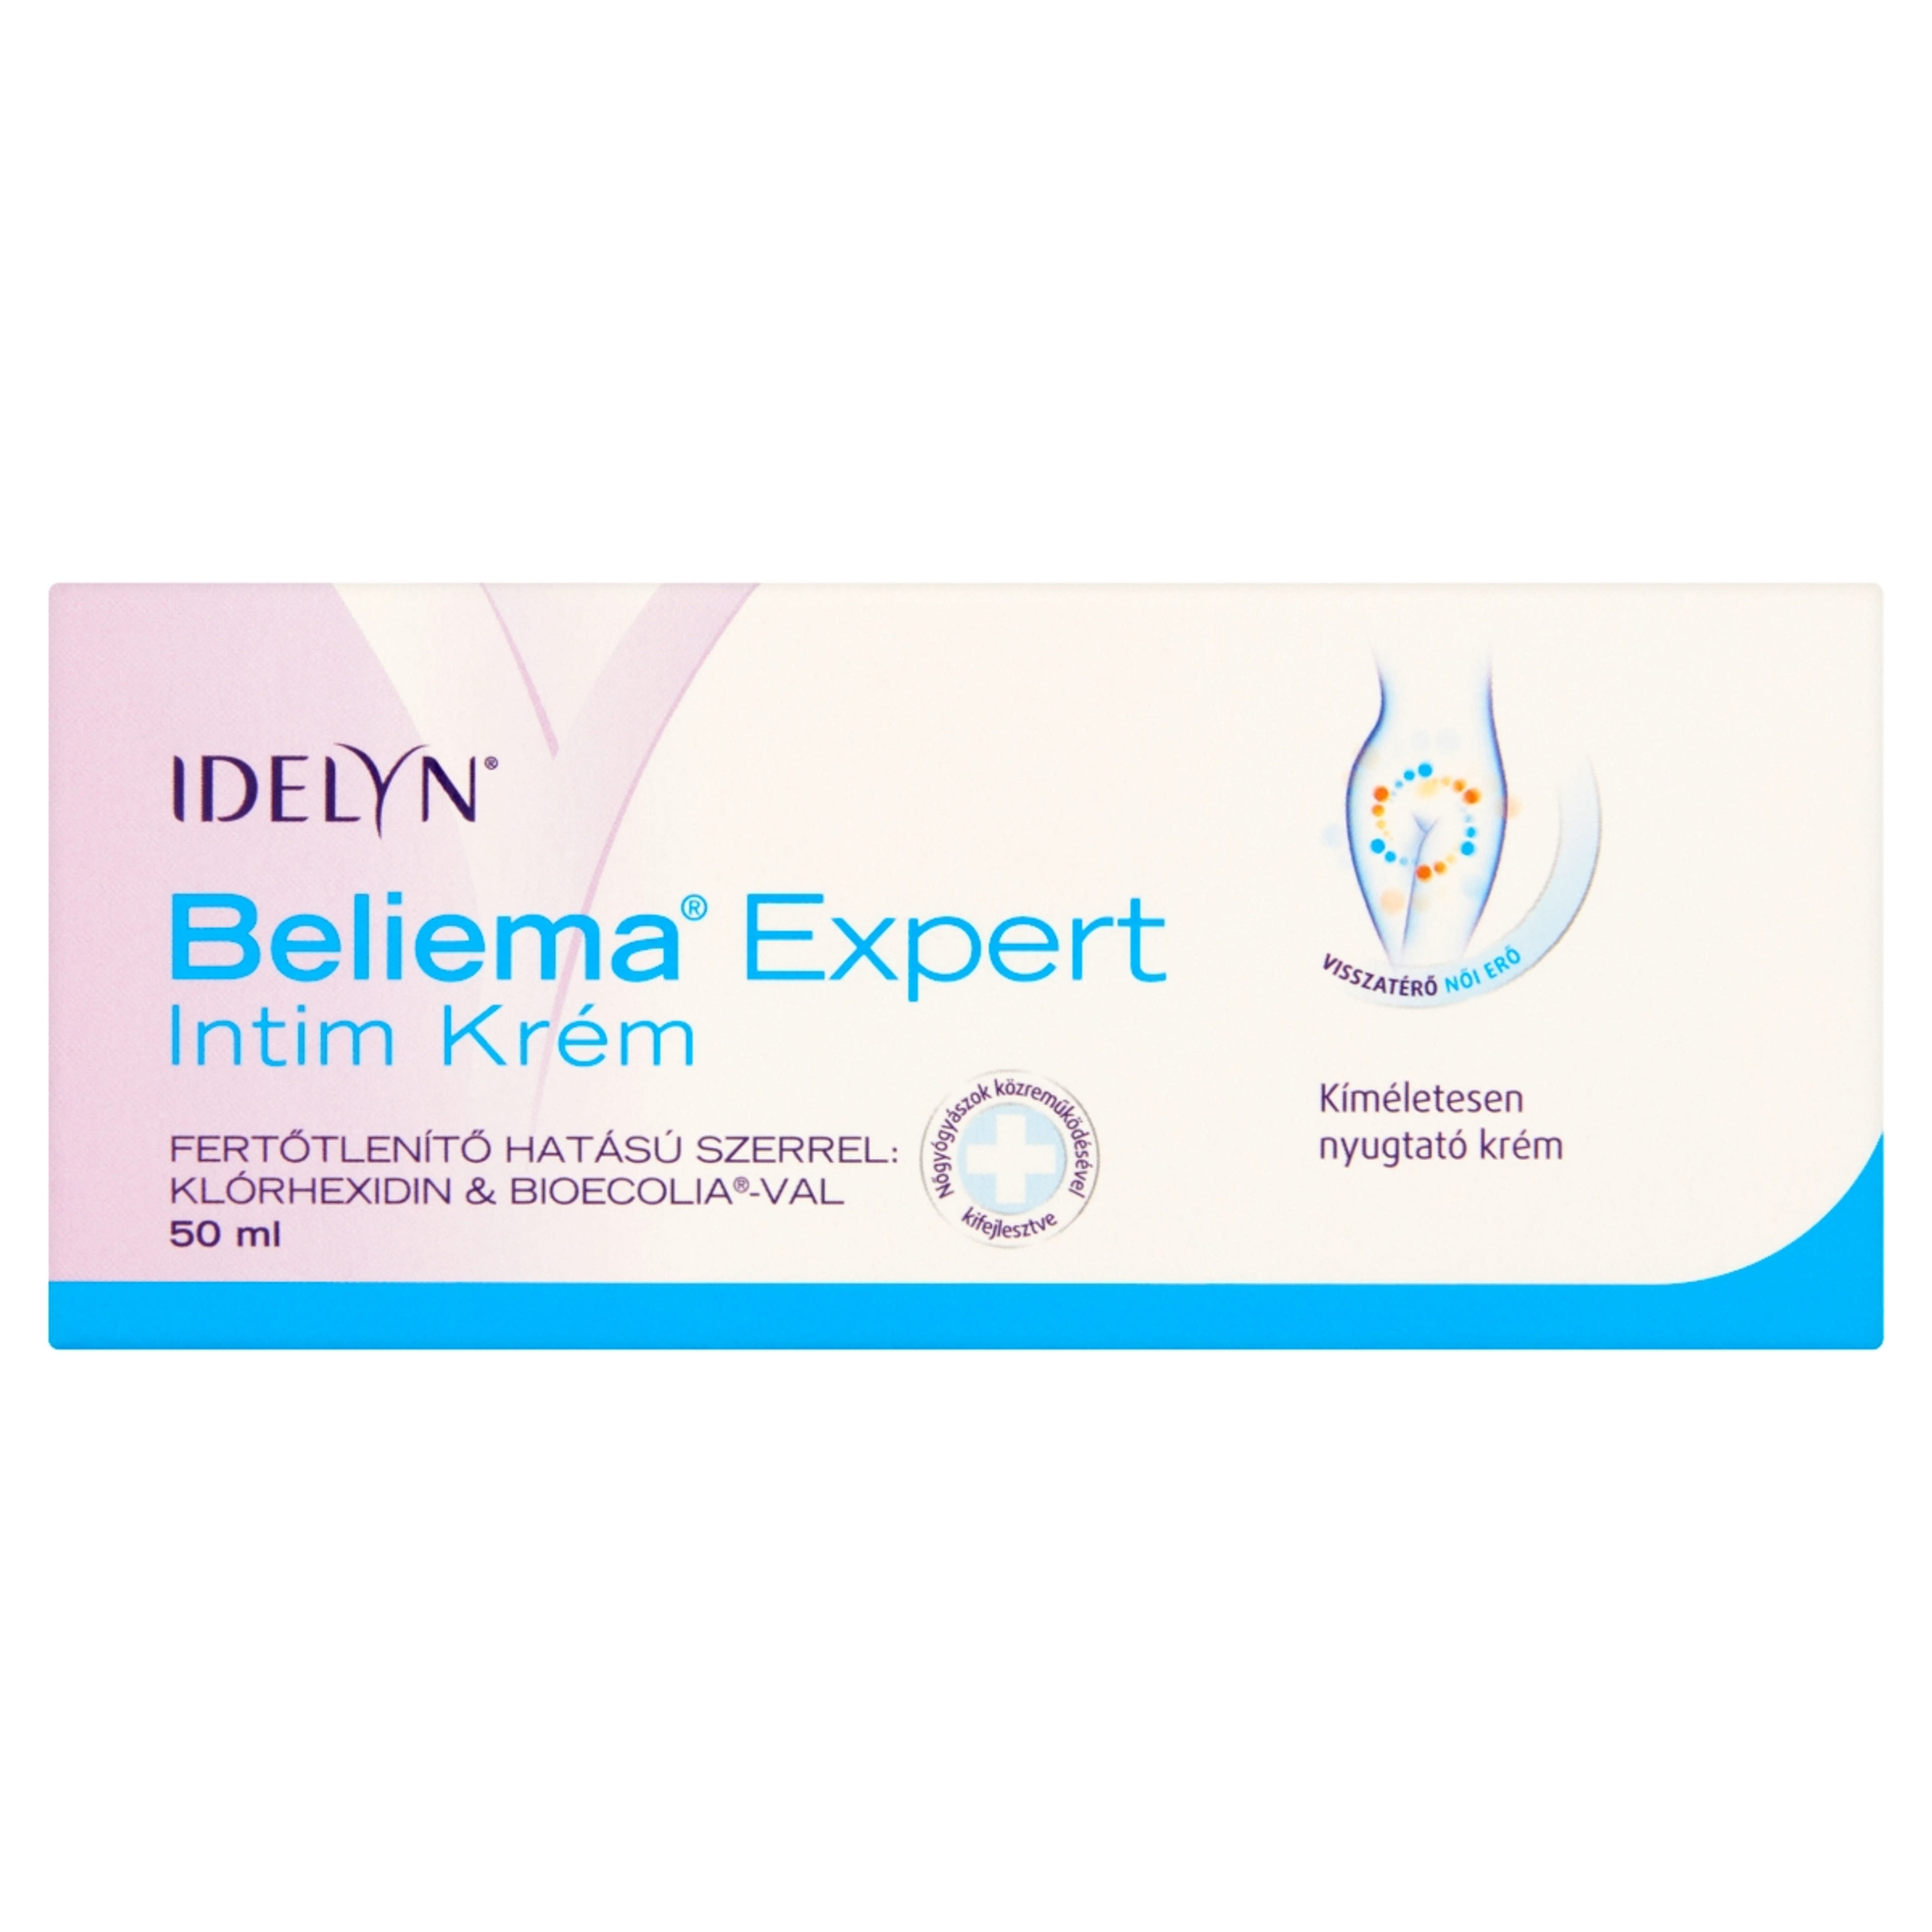 Idelyn Beliema Expert intim krém - 50 ml-1